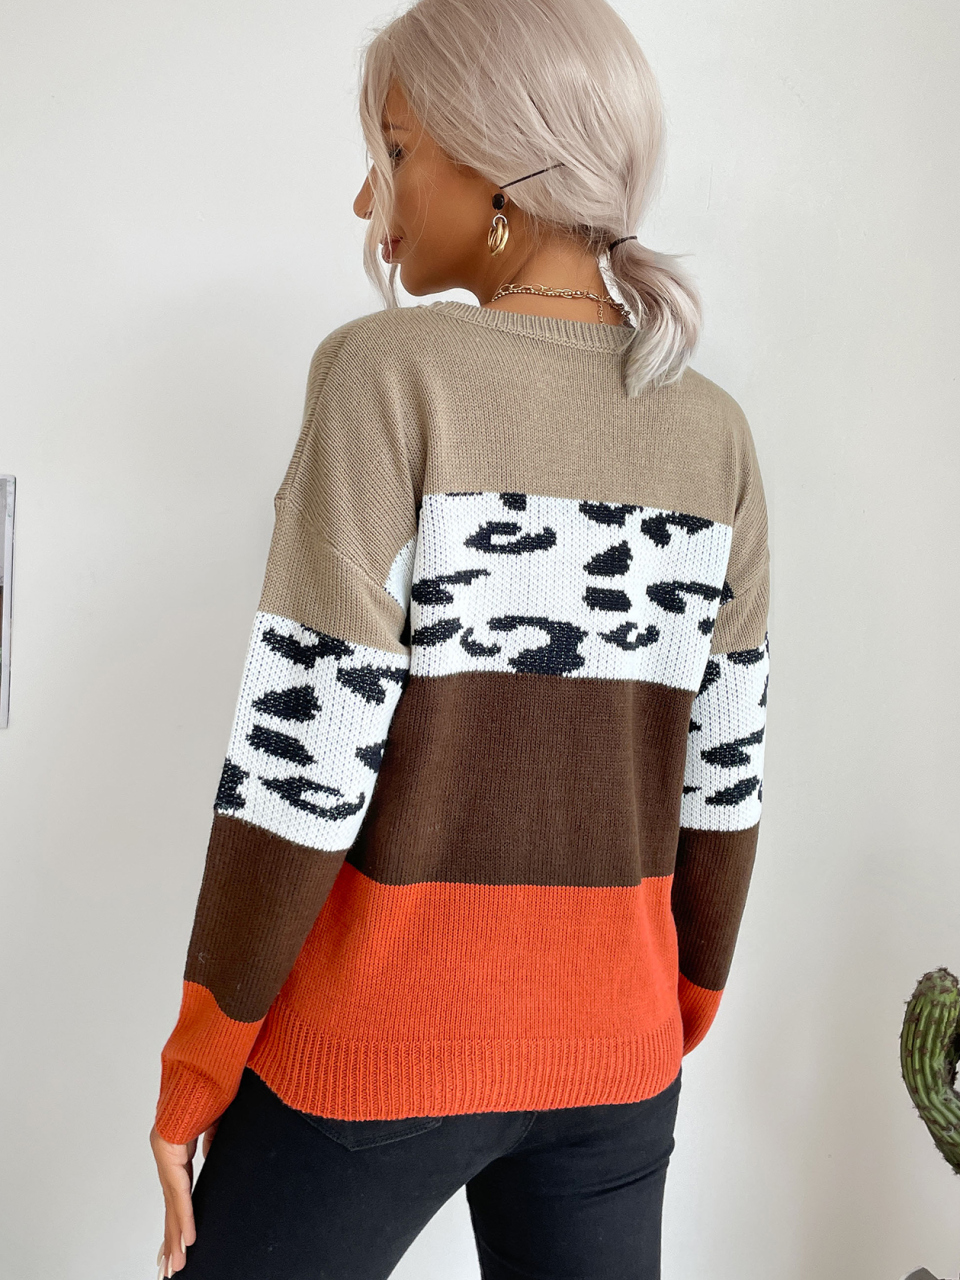 Women's casual fashion trend pullover women's sweater